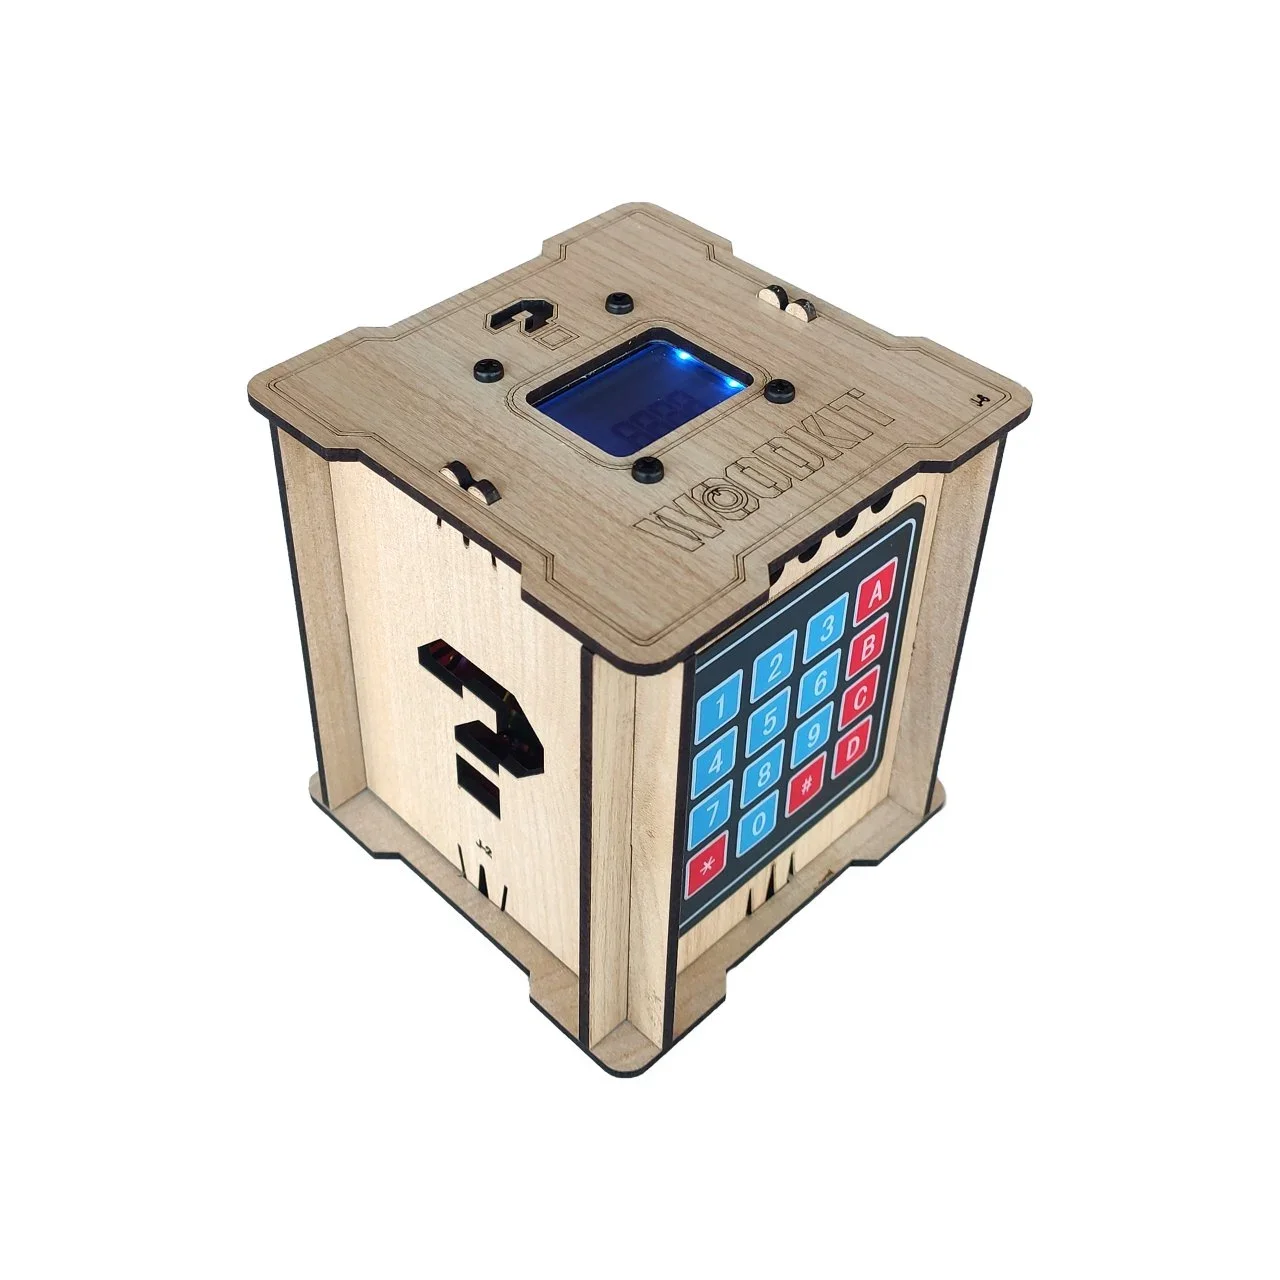 Wood-Kit Robotic Coding kit - Number Guessing Game